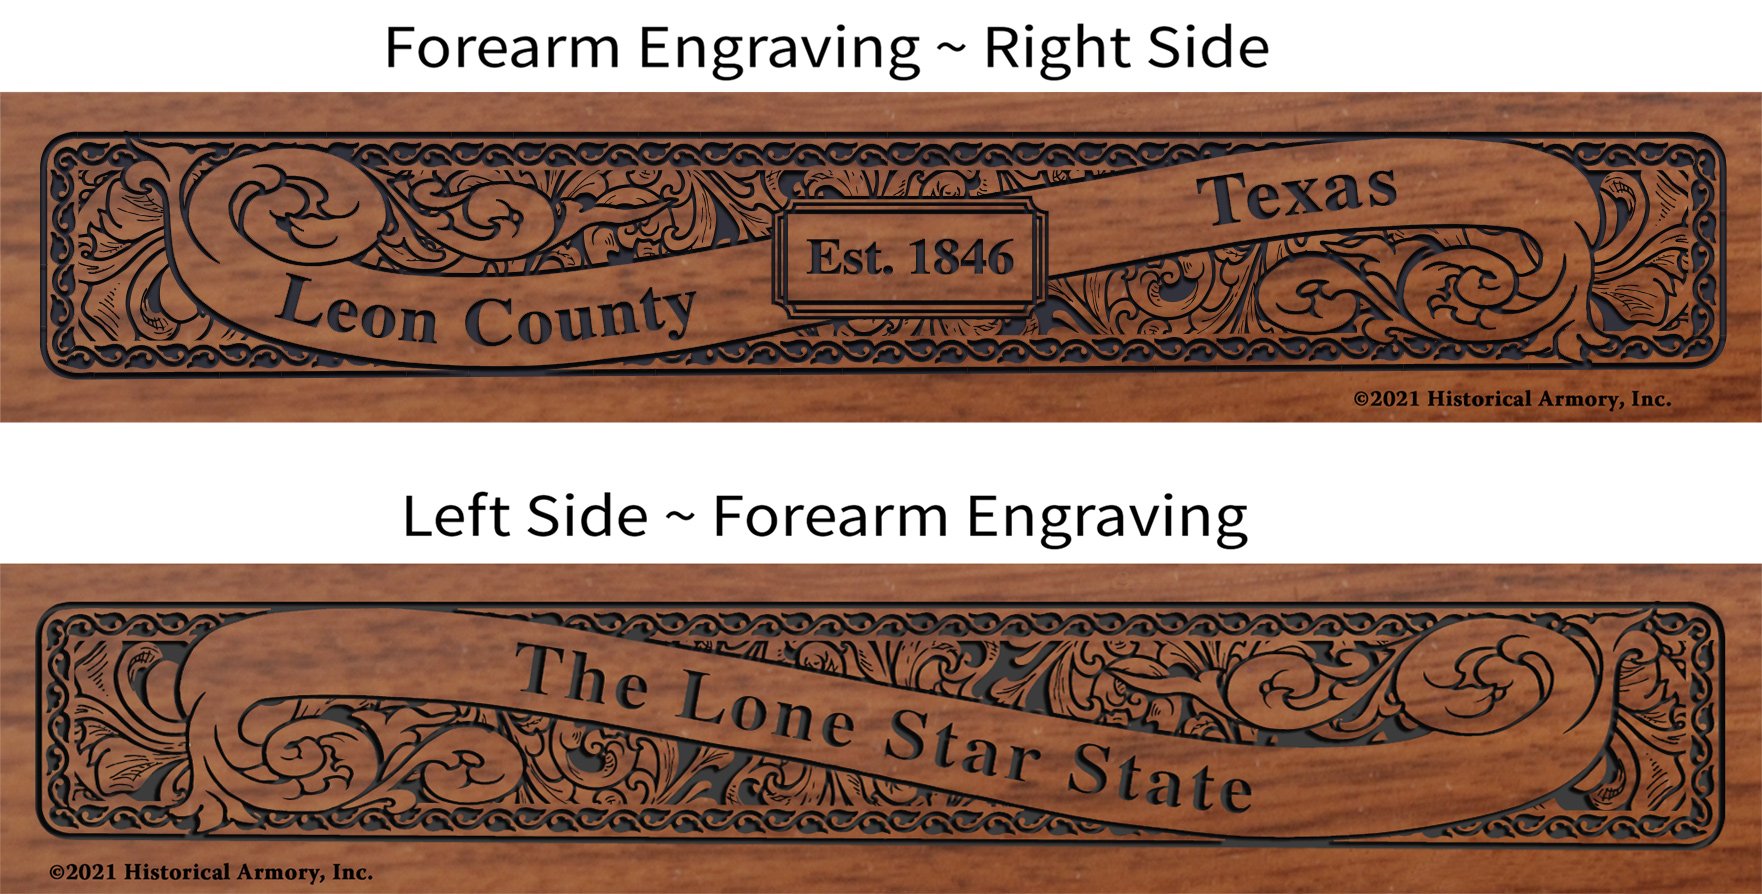 Leon County Texas Establishment and Motto History Engraved Rifle Forearm